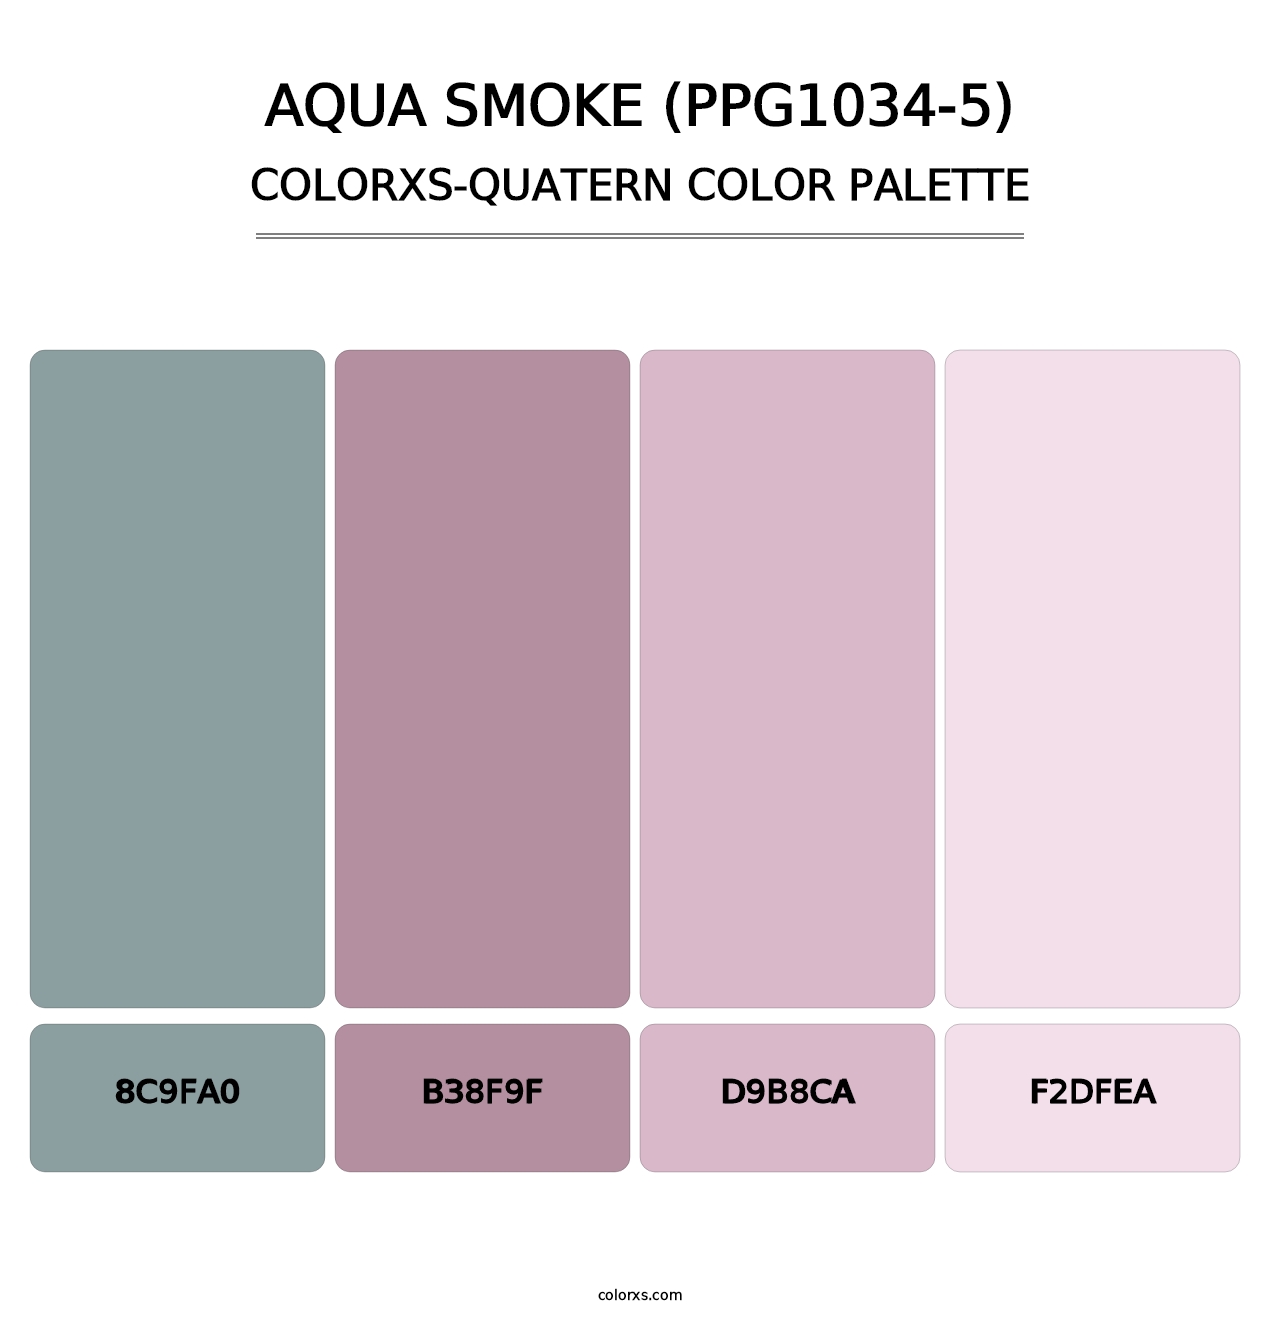 Aqua Smoke (PPG1034-5) - Colorxs Quatern Palette